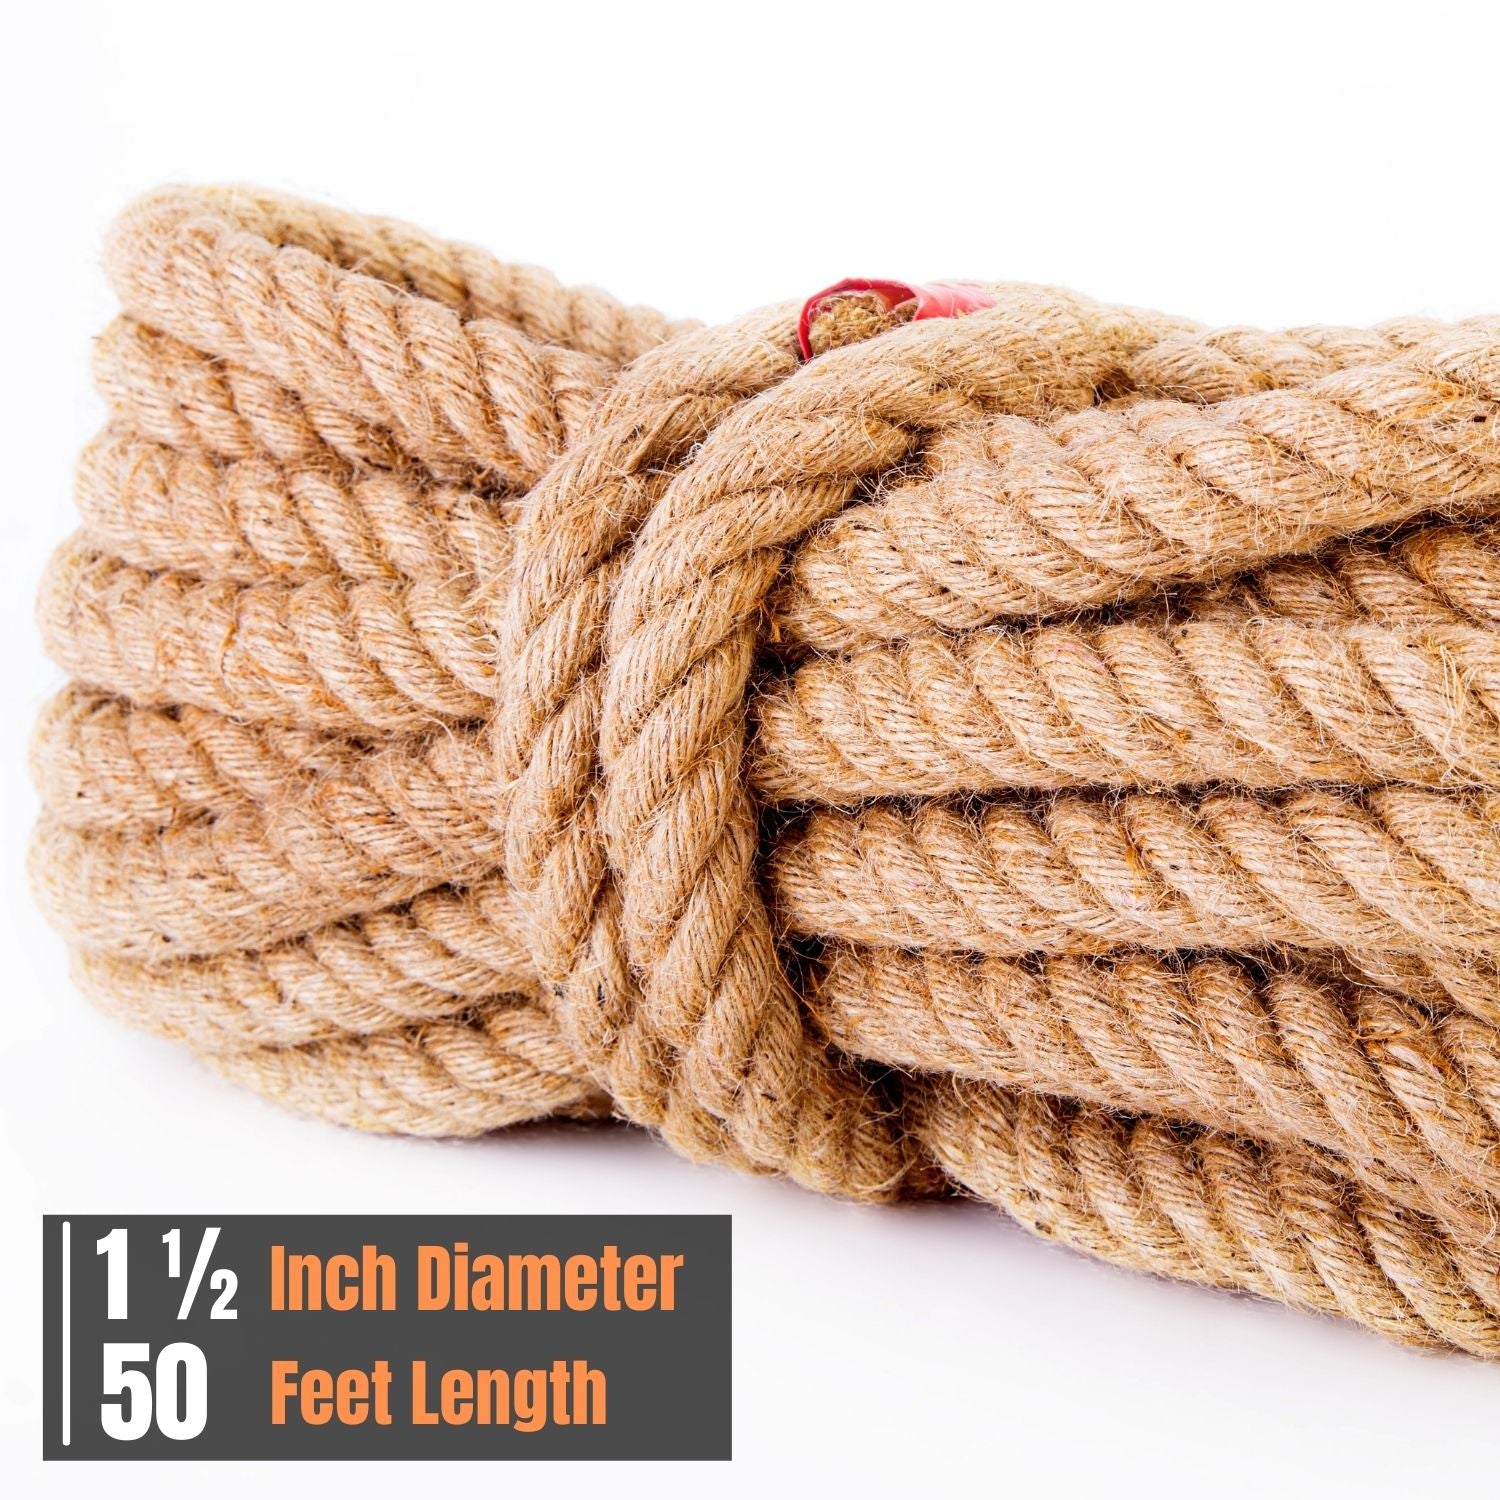 Manila Rope 1.5″×50′- Nautical Ropes - Natural Jute Rope - Large Decorative Hemp Rope - Thick Heavy Duty 